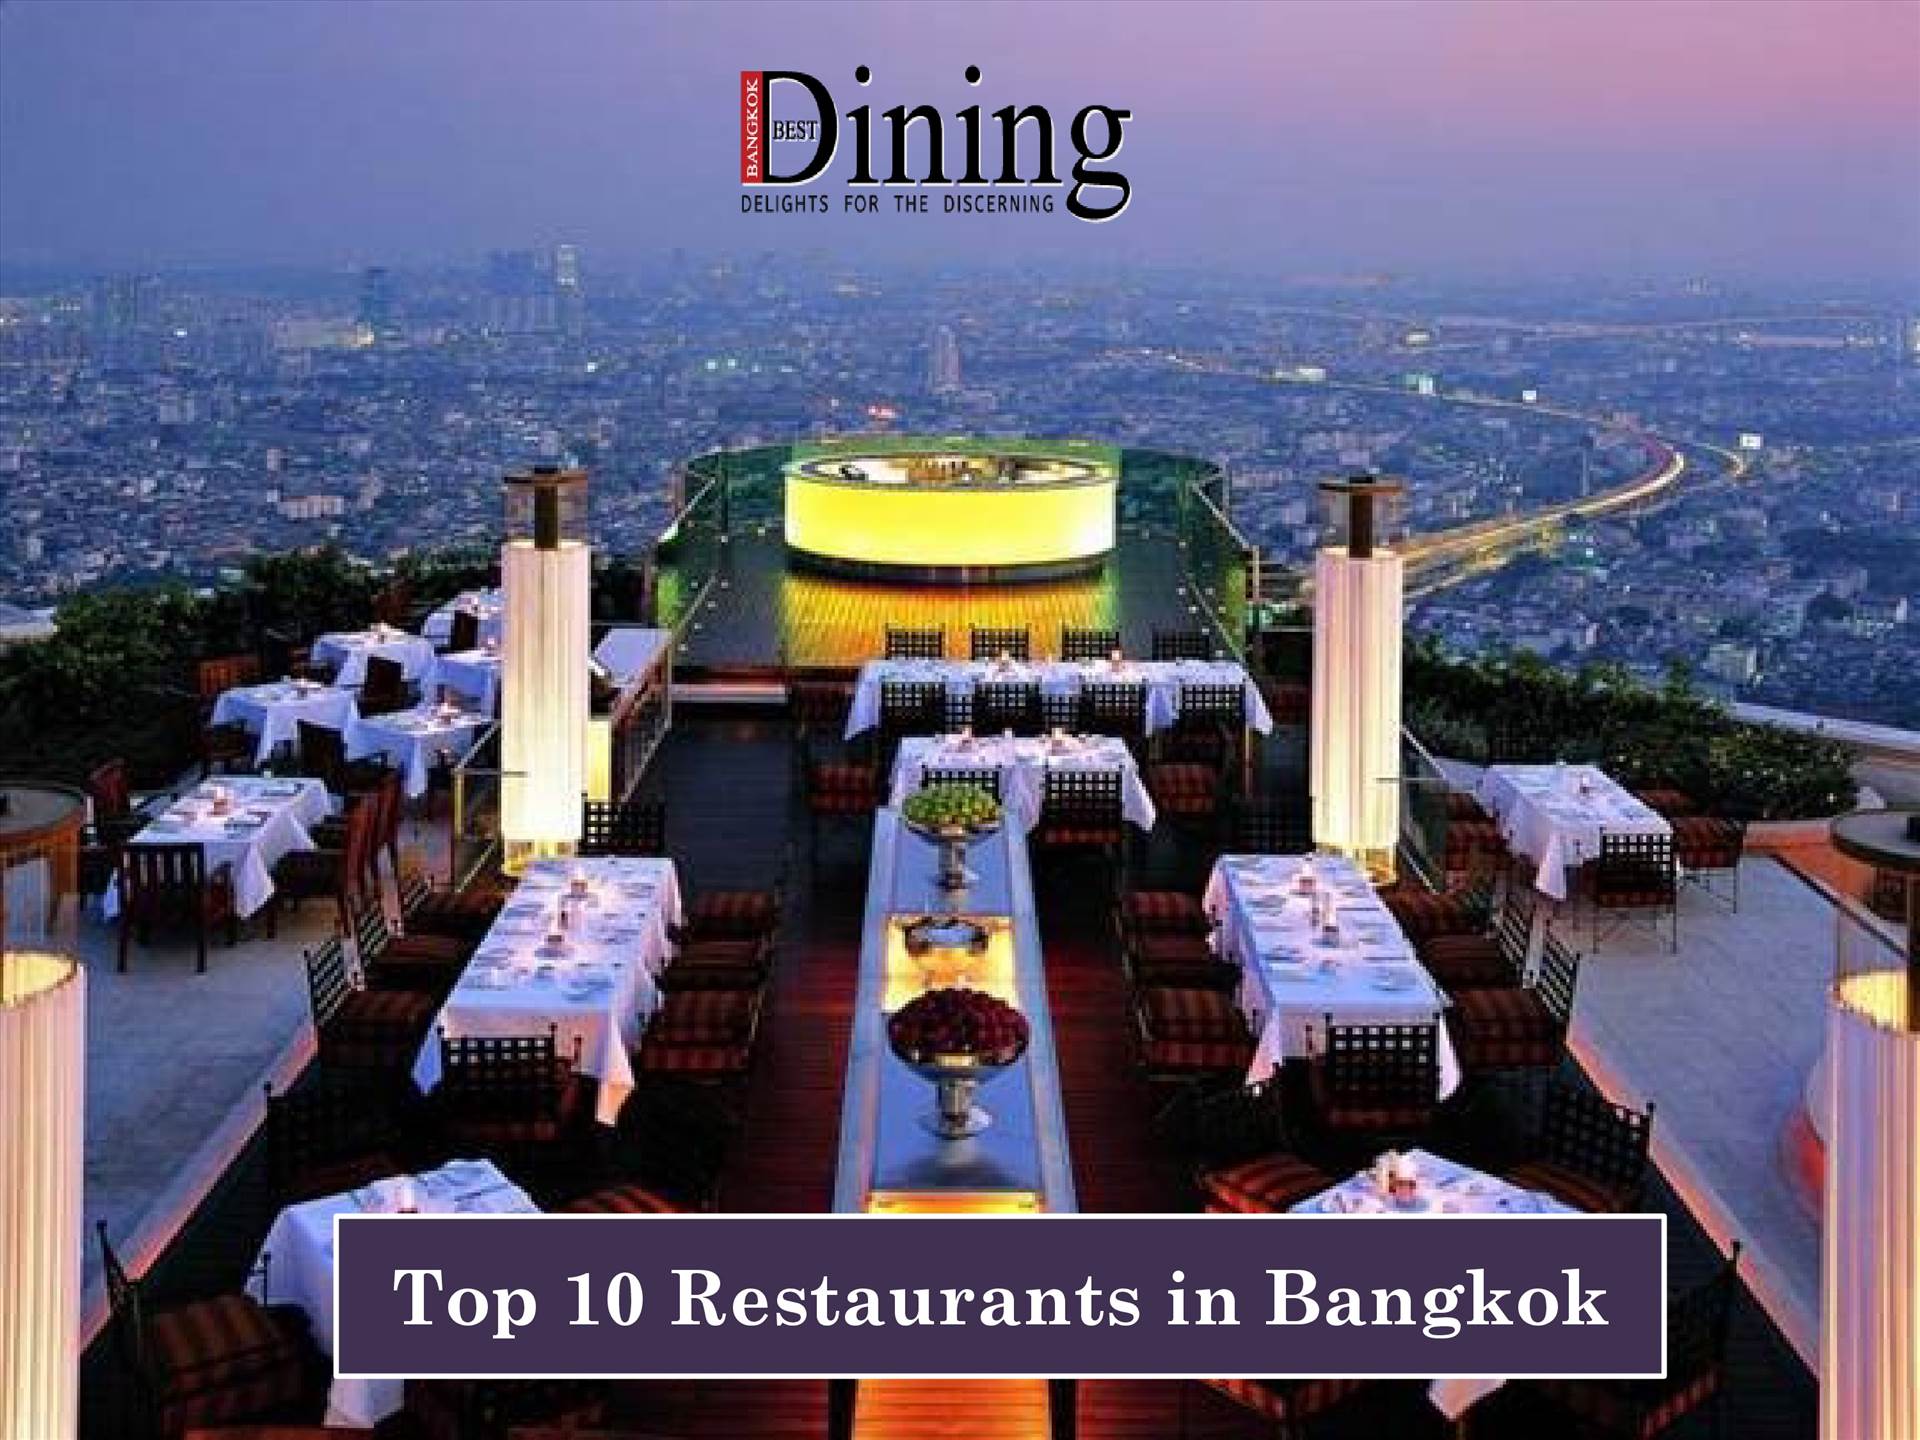 Top 10 restaurants in Bangkok.jpg  by bangkokbestdining